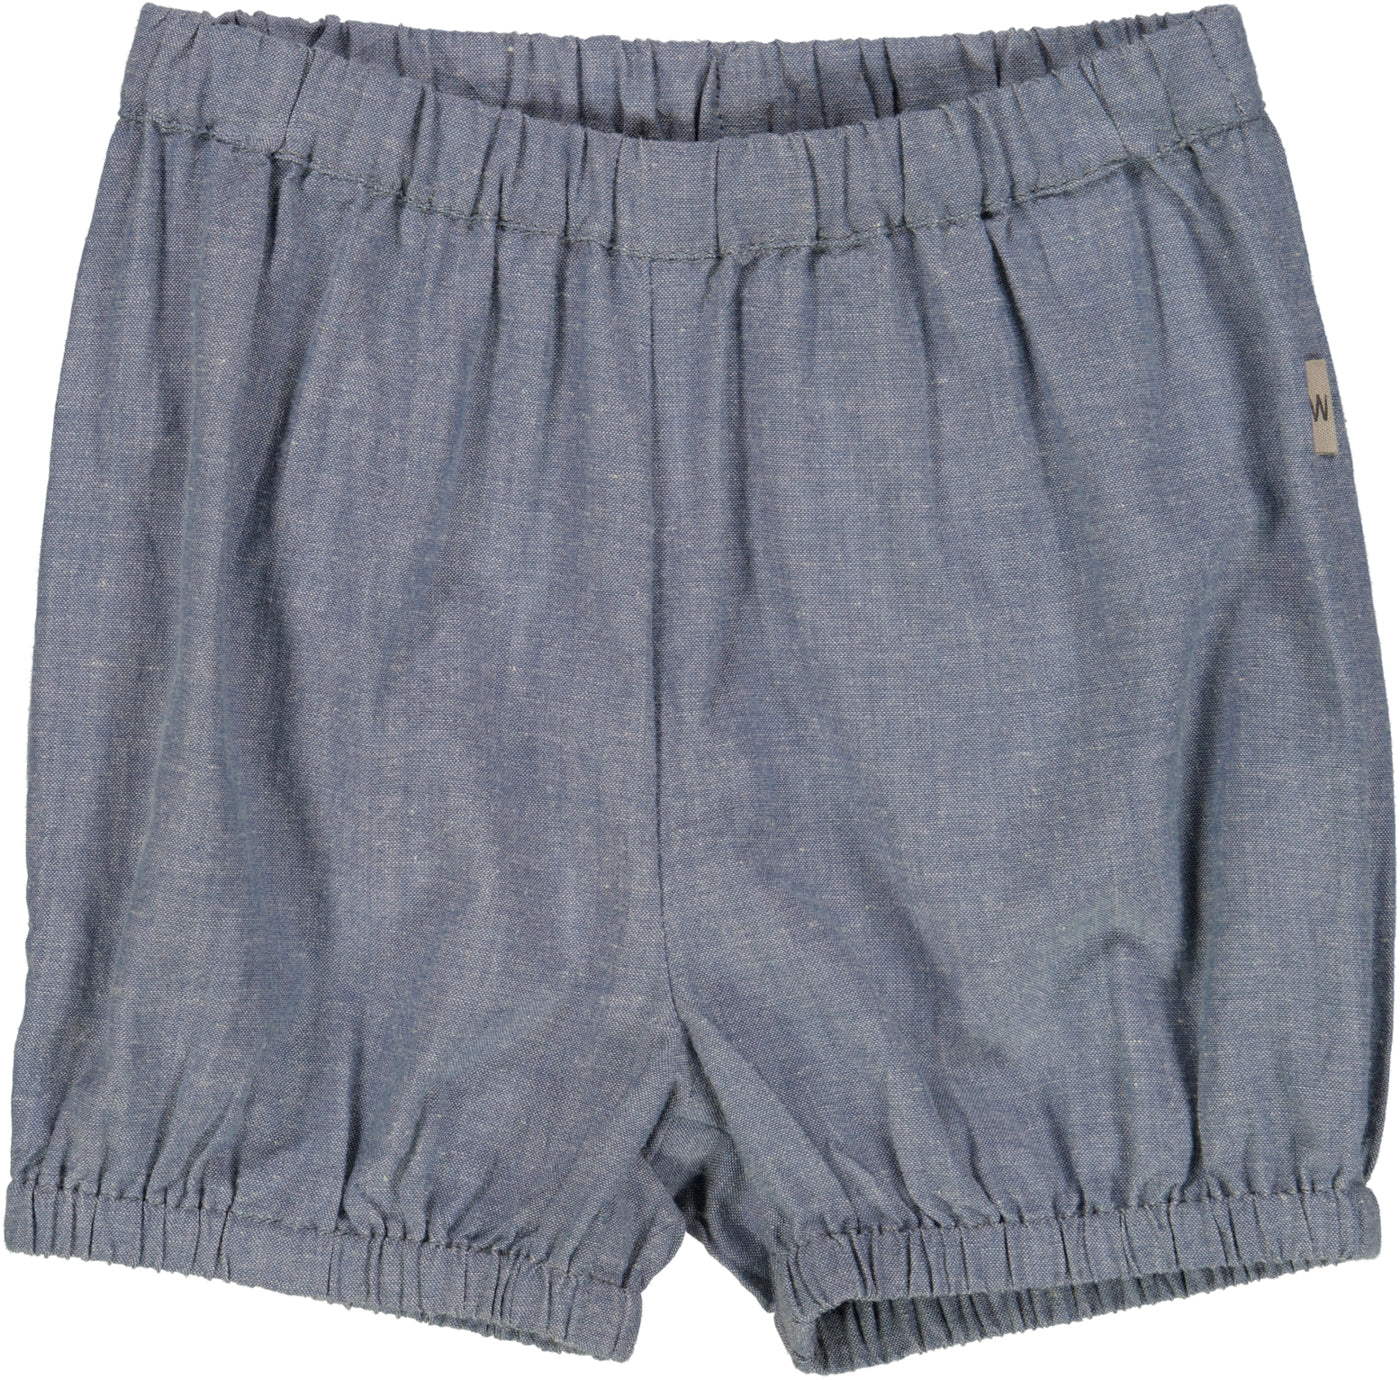 Blå baby shorts - set forfra